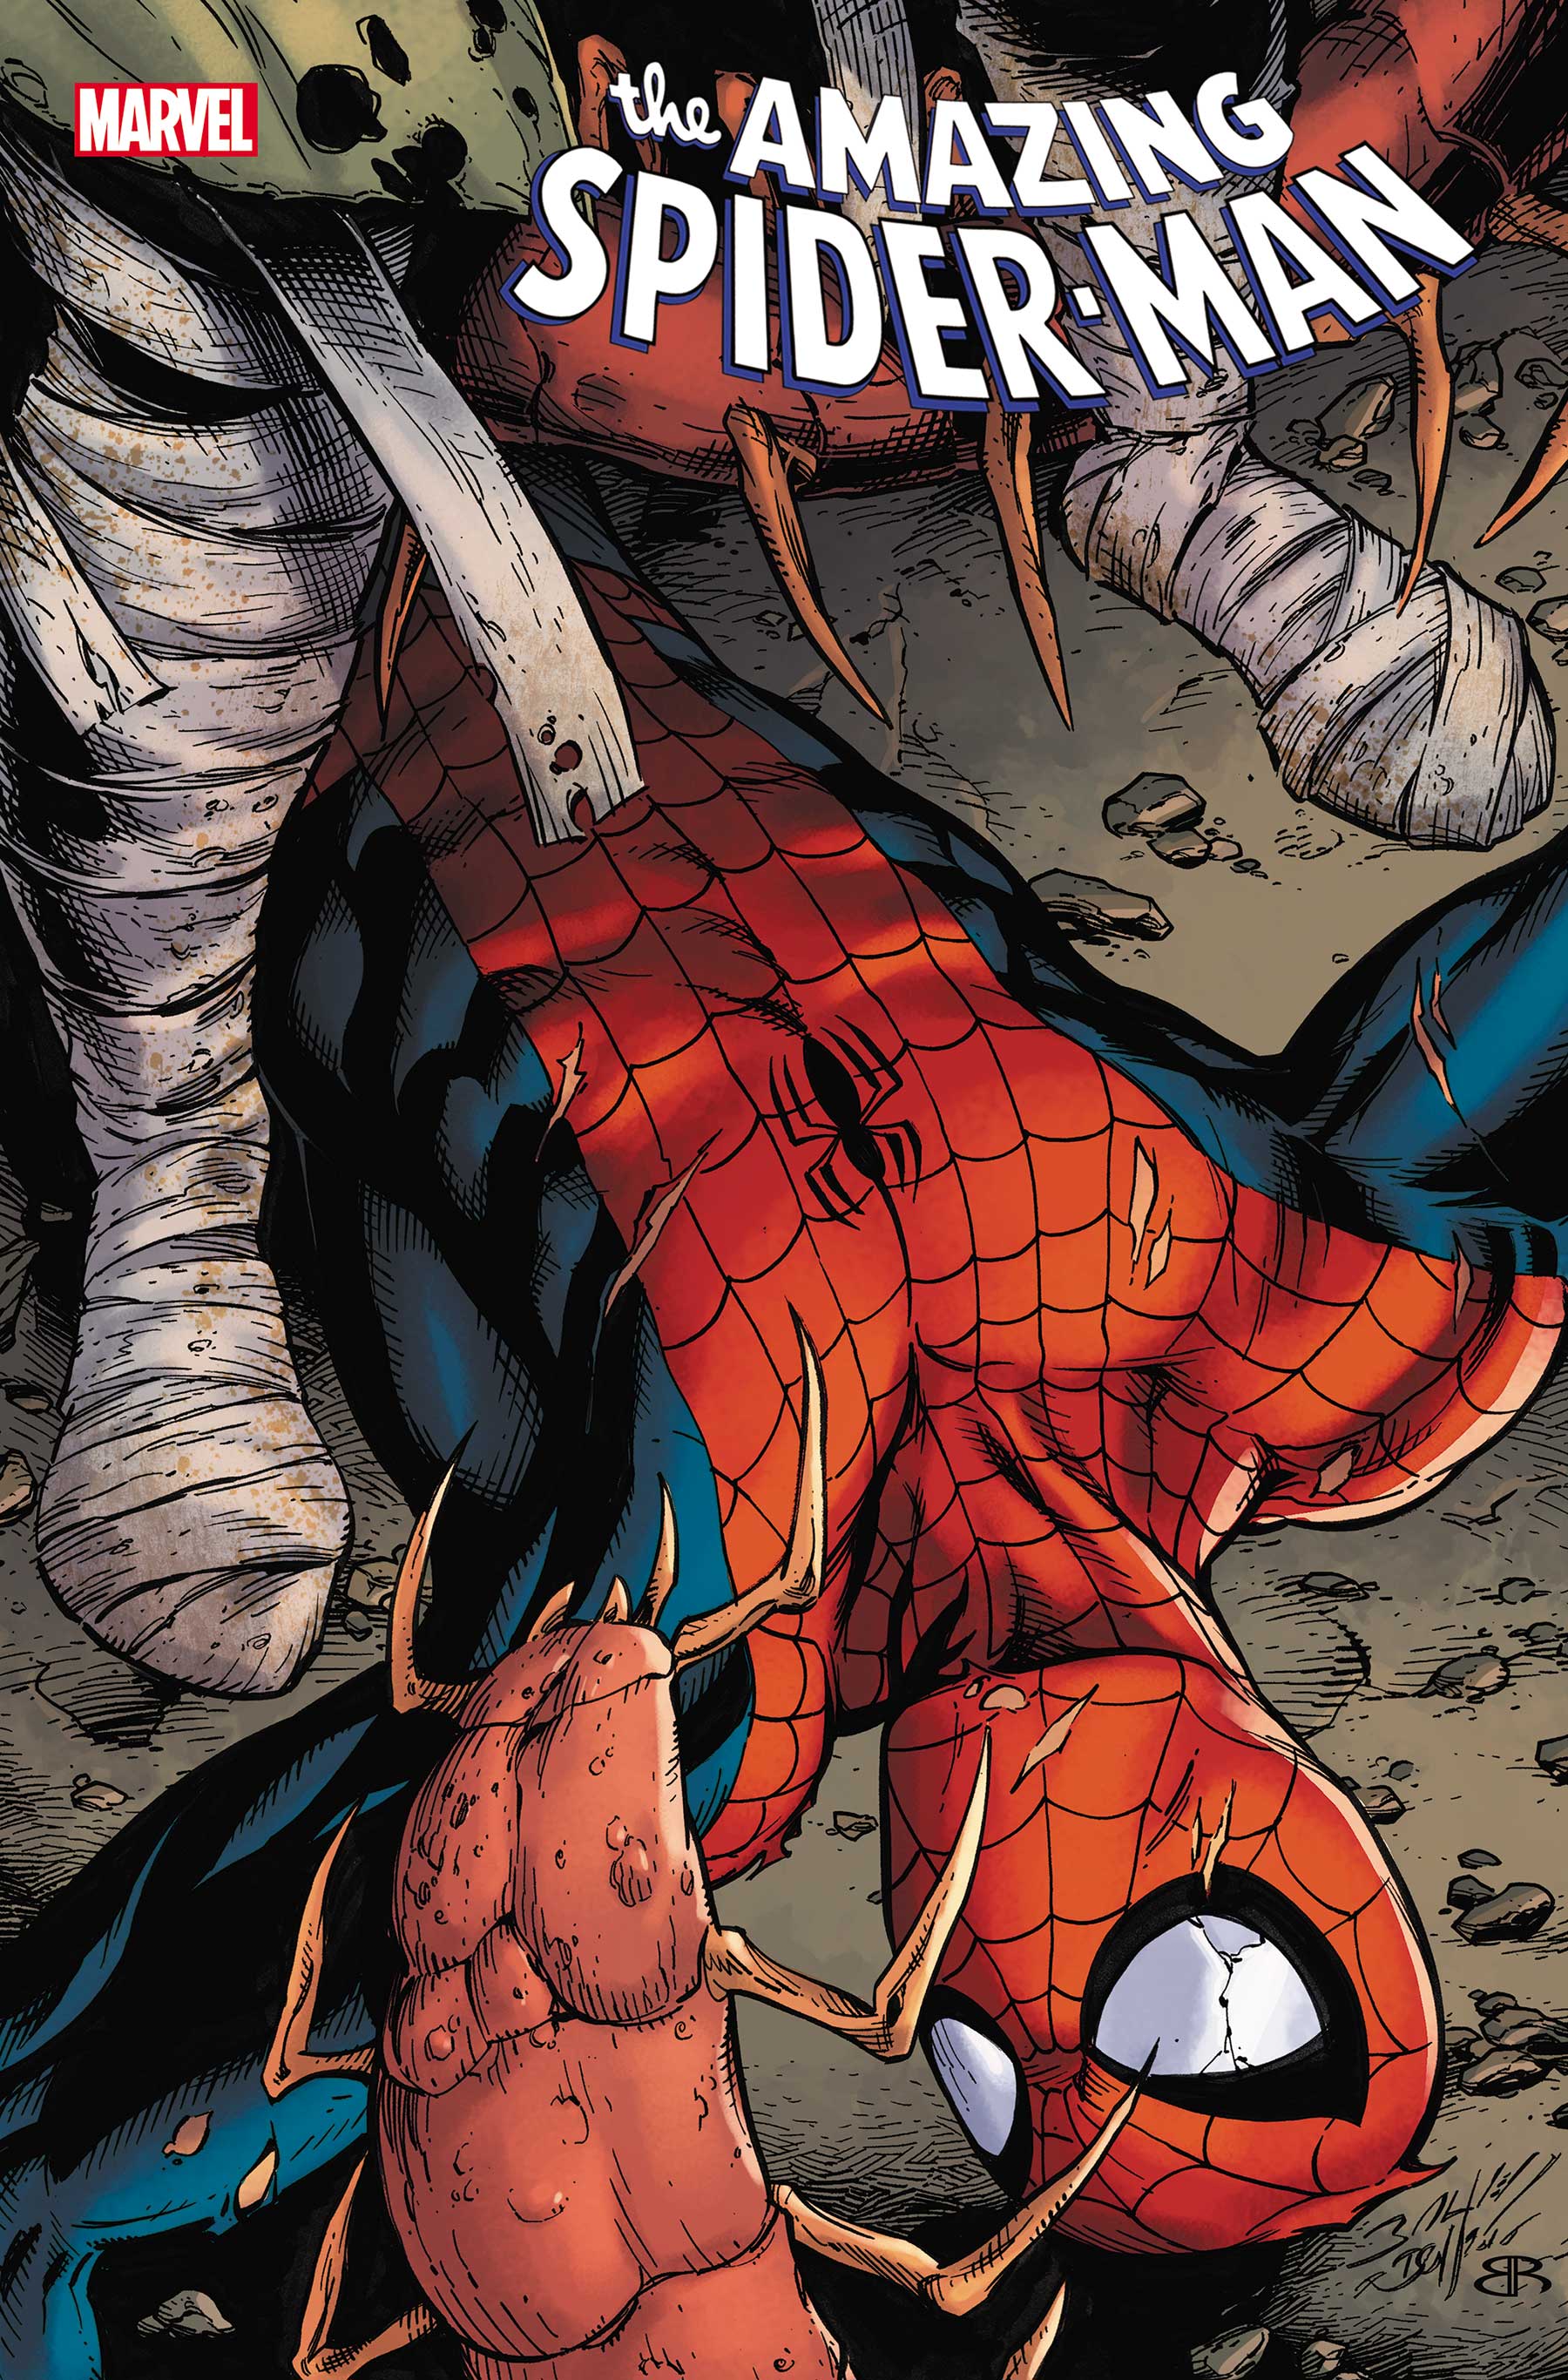 The Amazing Spider-Man (2018) #72